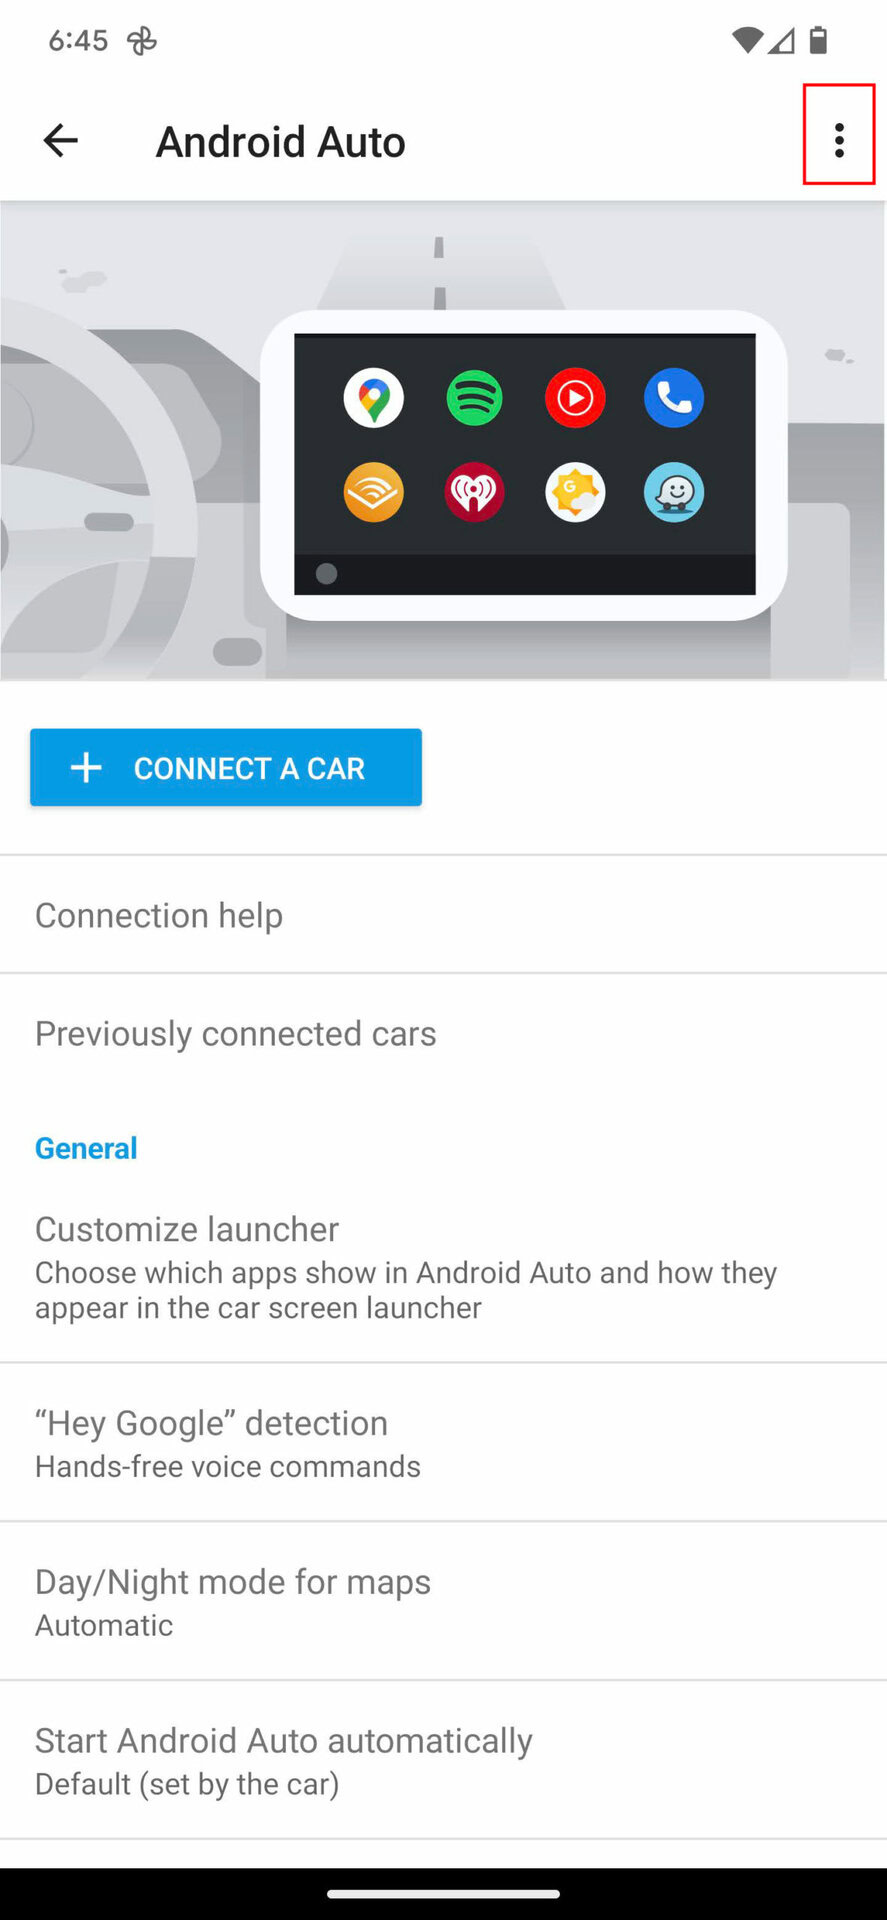 Android Auto FAQ